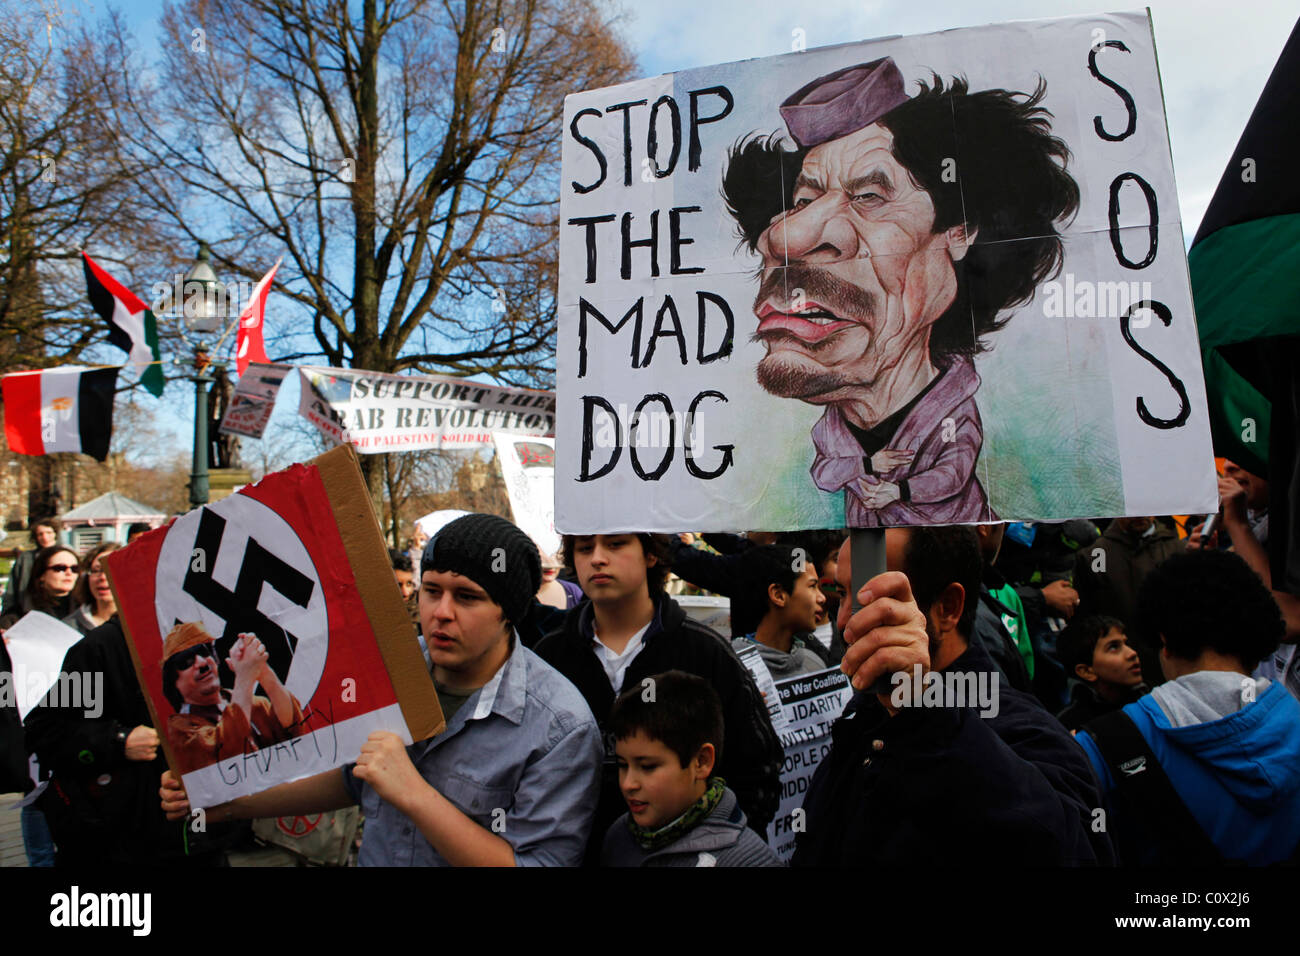 Image result for anti-gaddafi demonstrators in streets